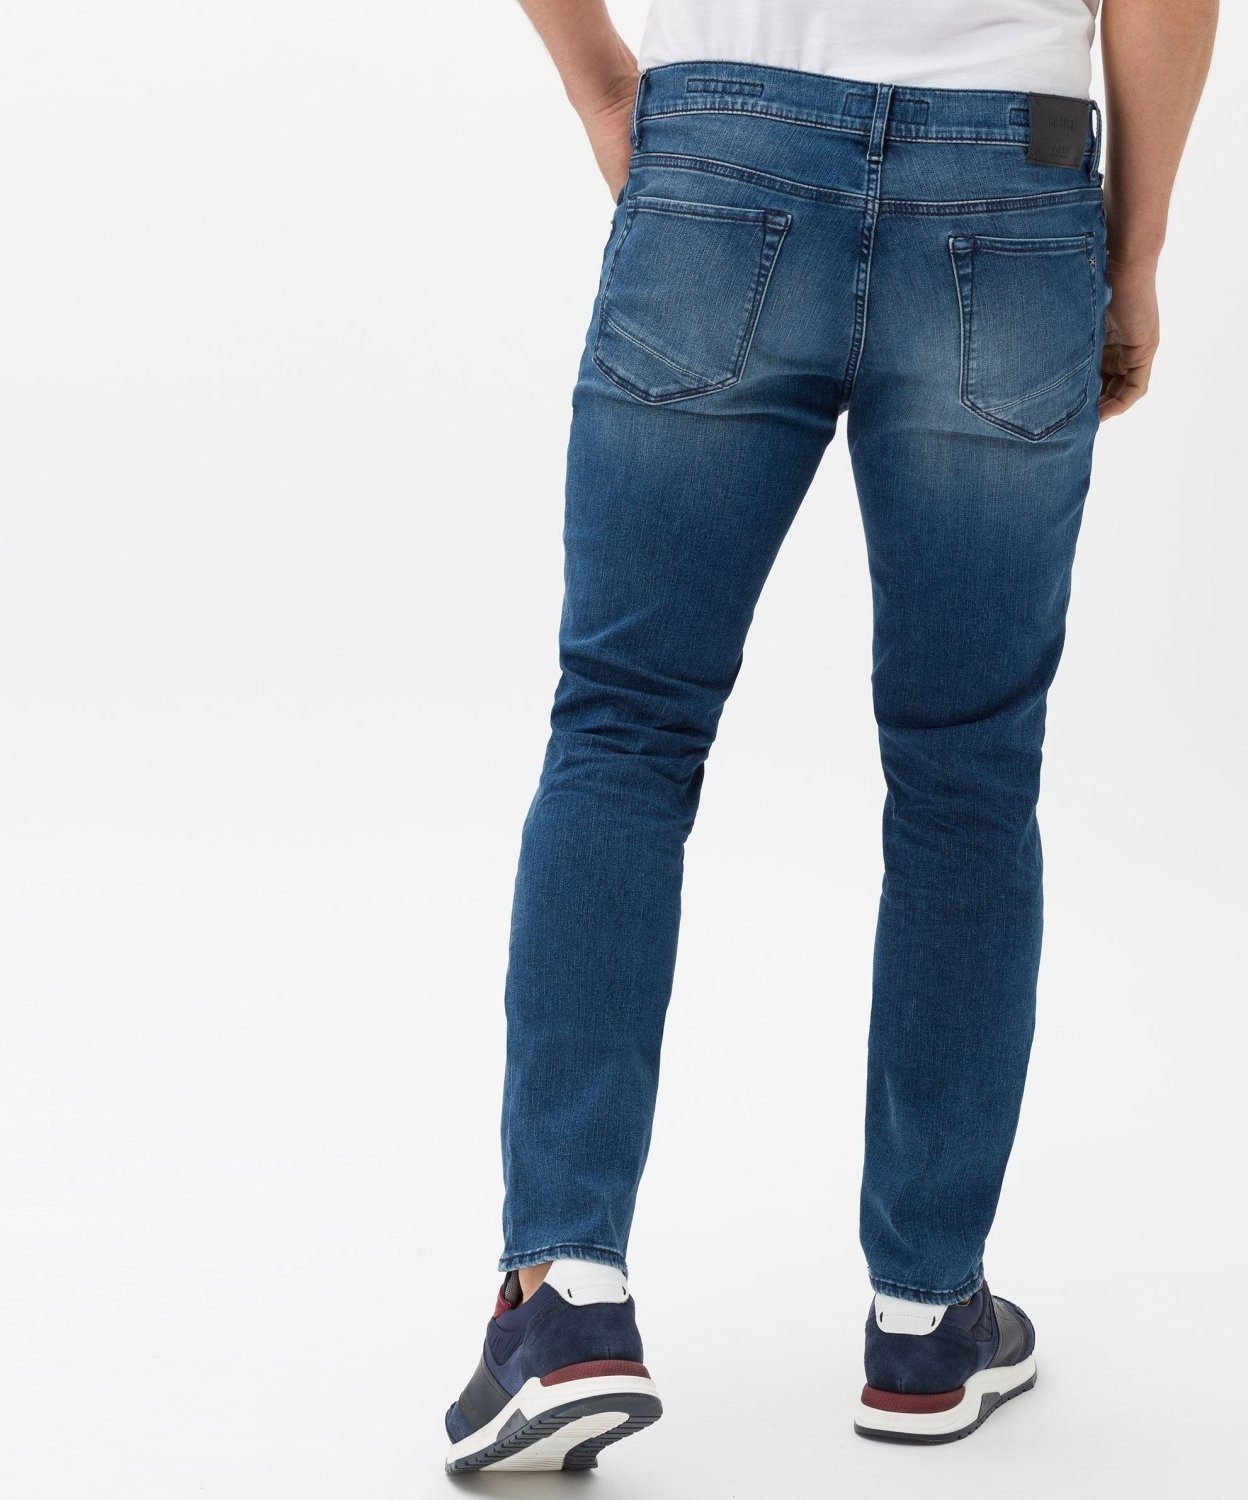 vintage 5-Pocket-Hose Brax Jeans Herren Slim Chuck Style used Fit blue